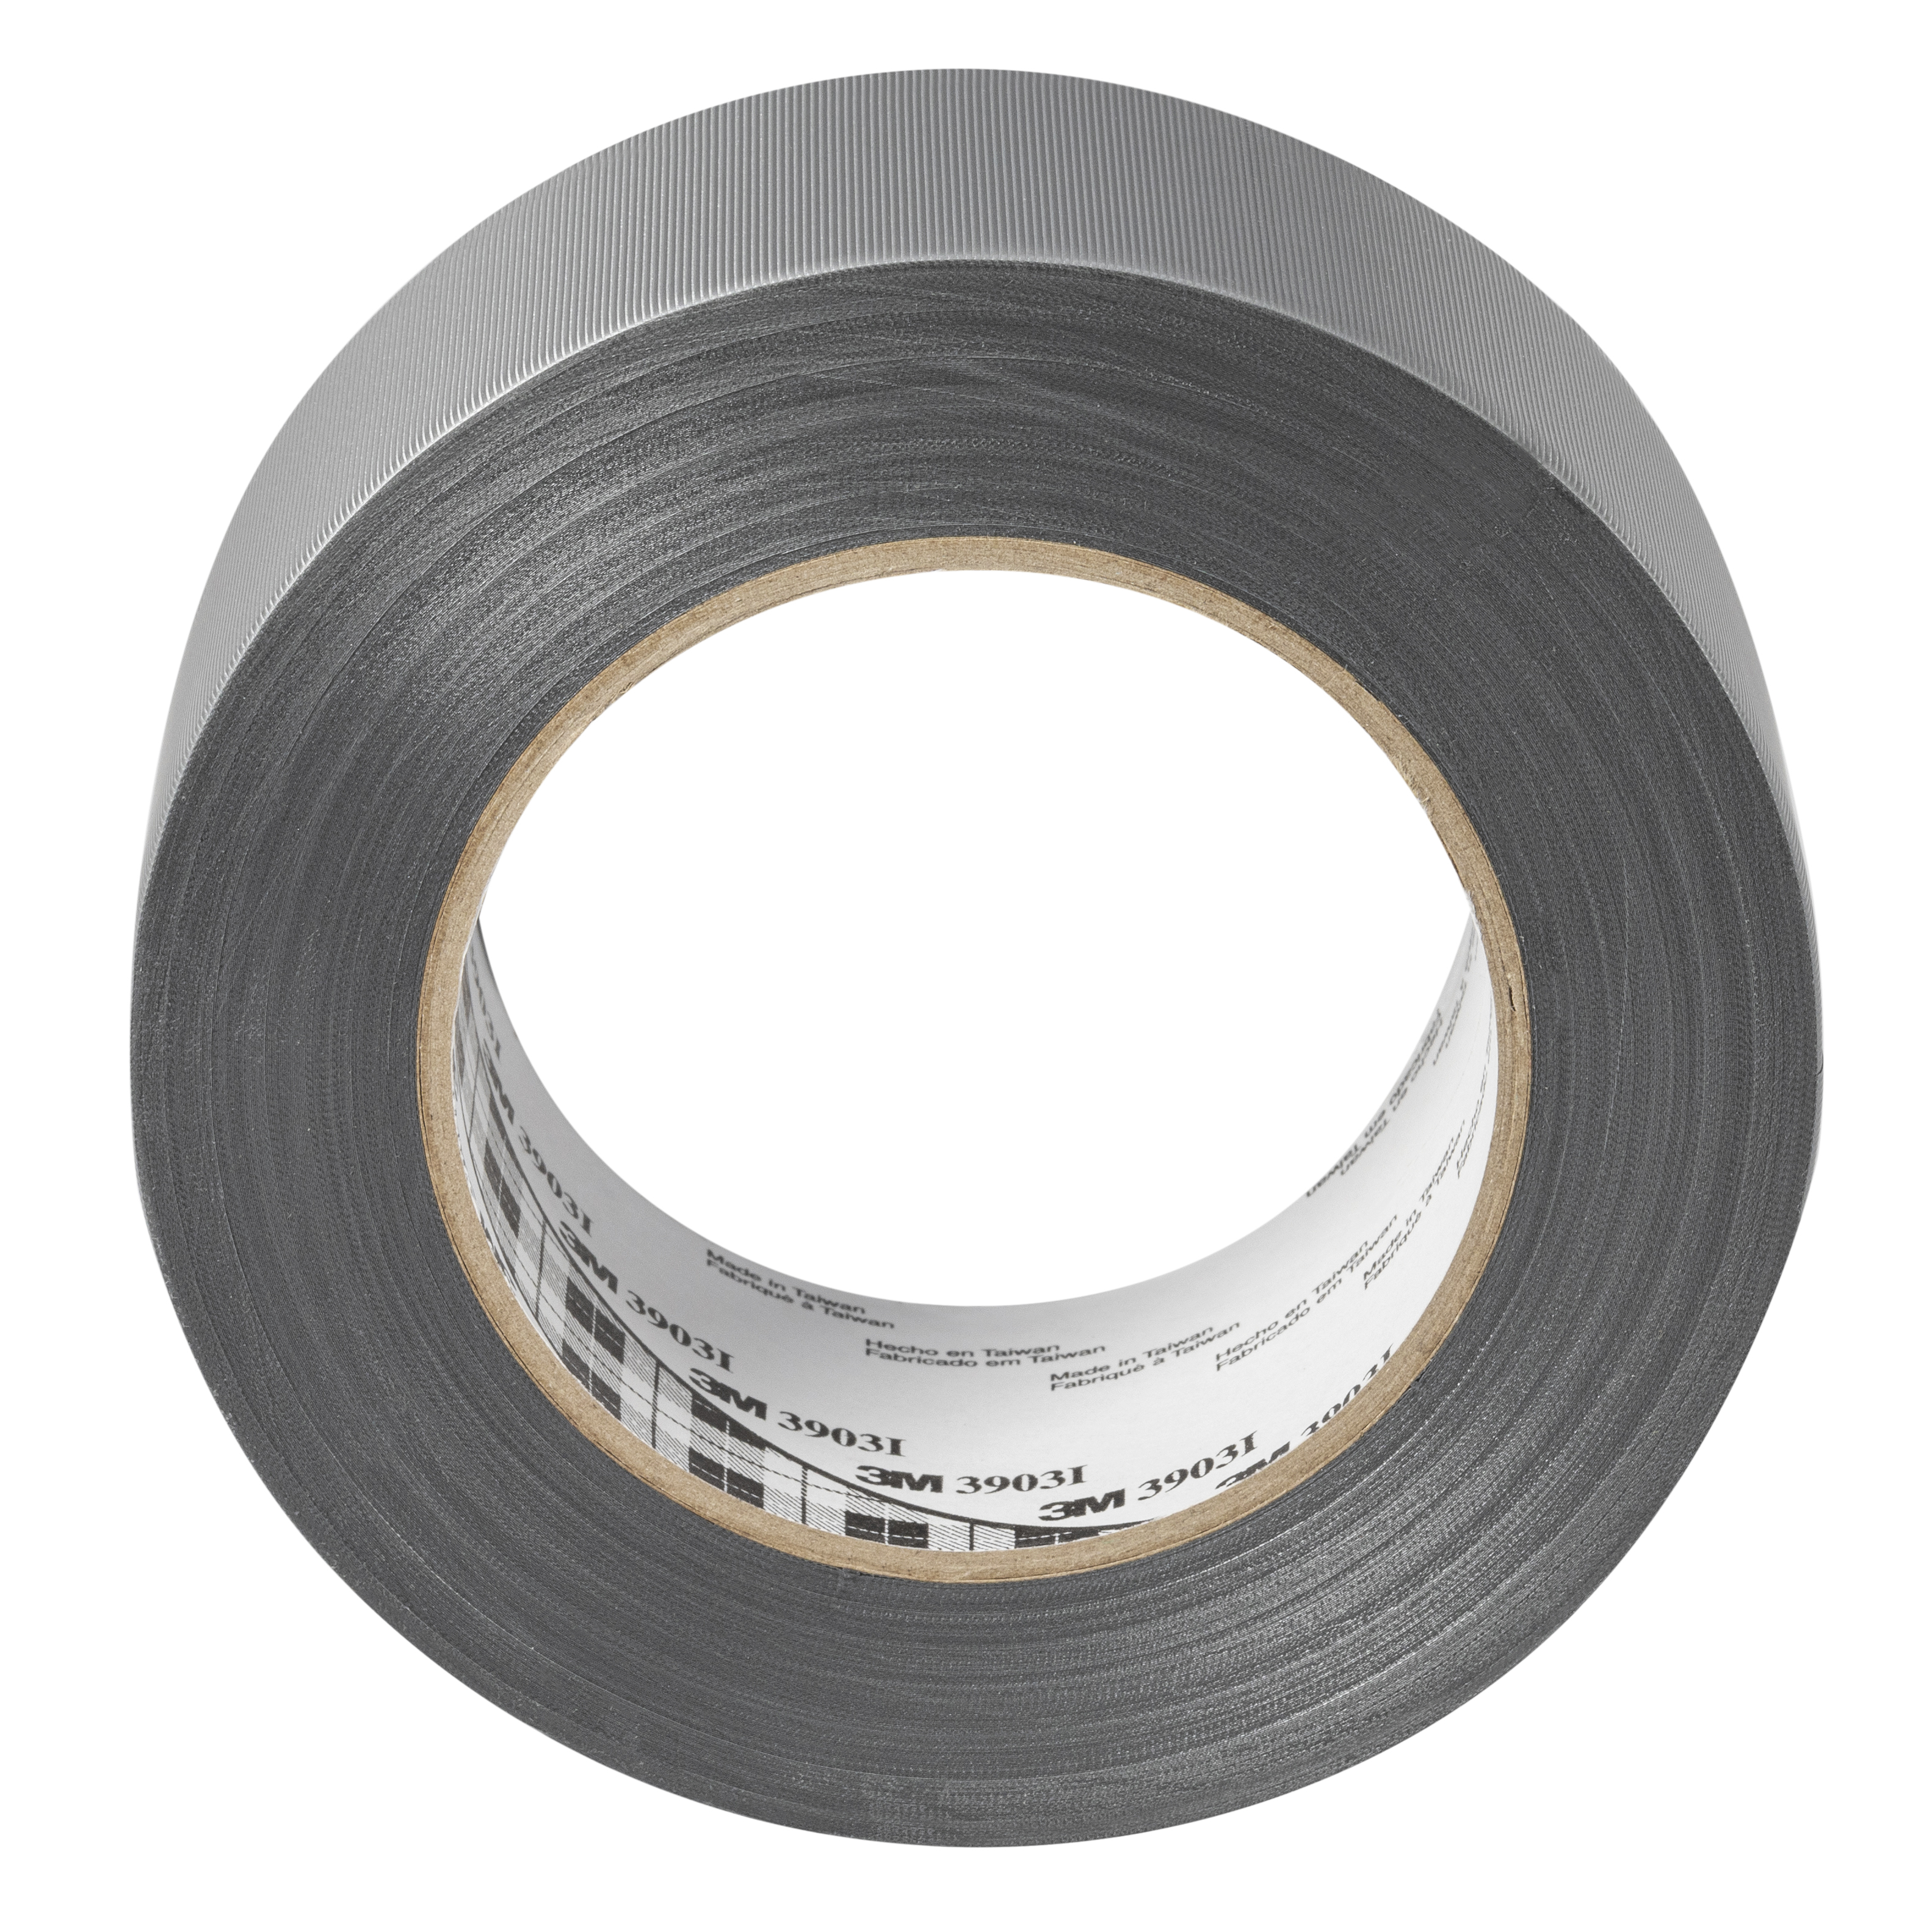 3M™ Vinyl-Klebeband 3903i, Silber, 50 mm x 50 m